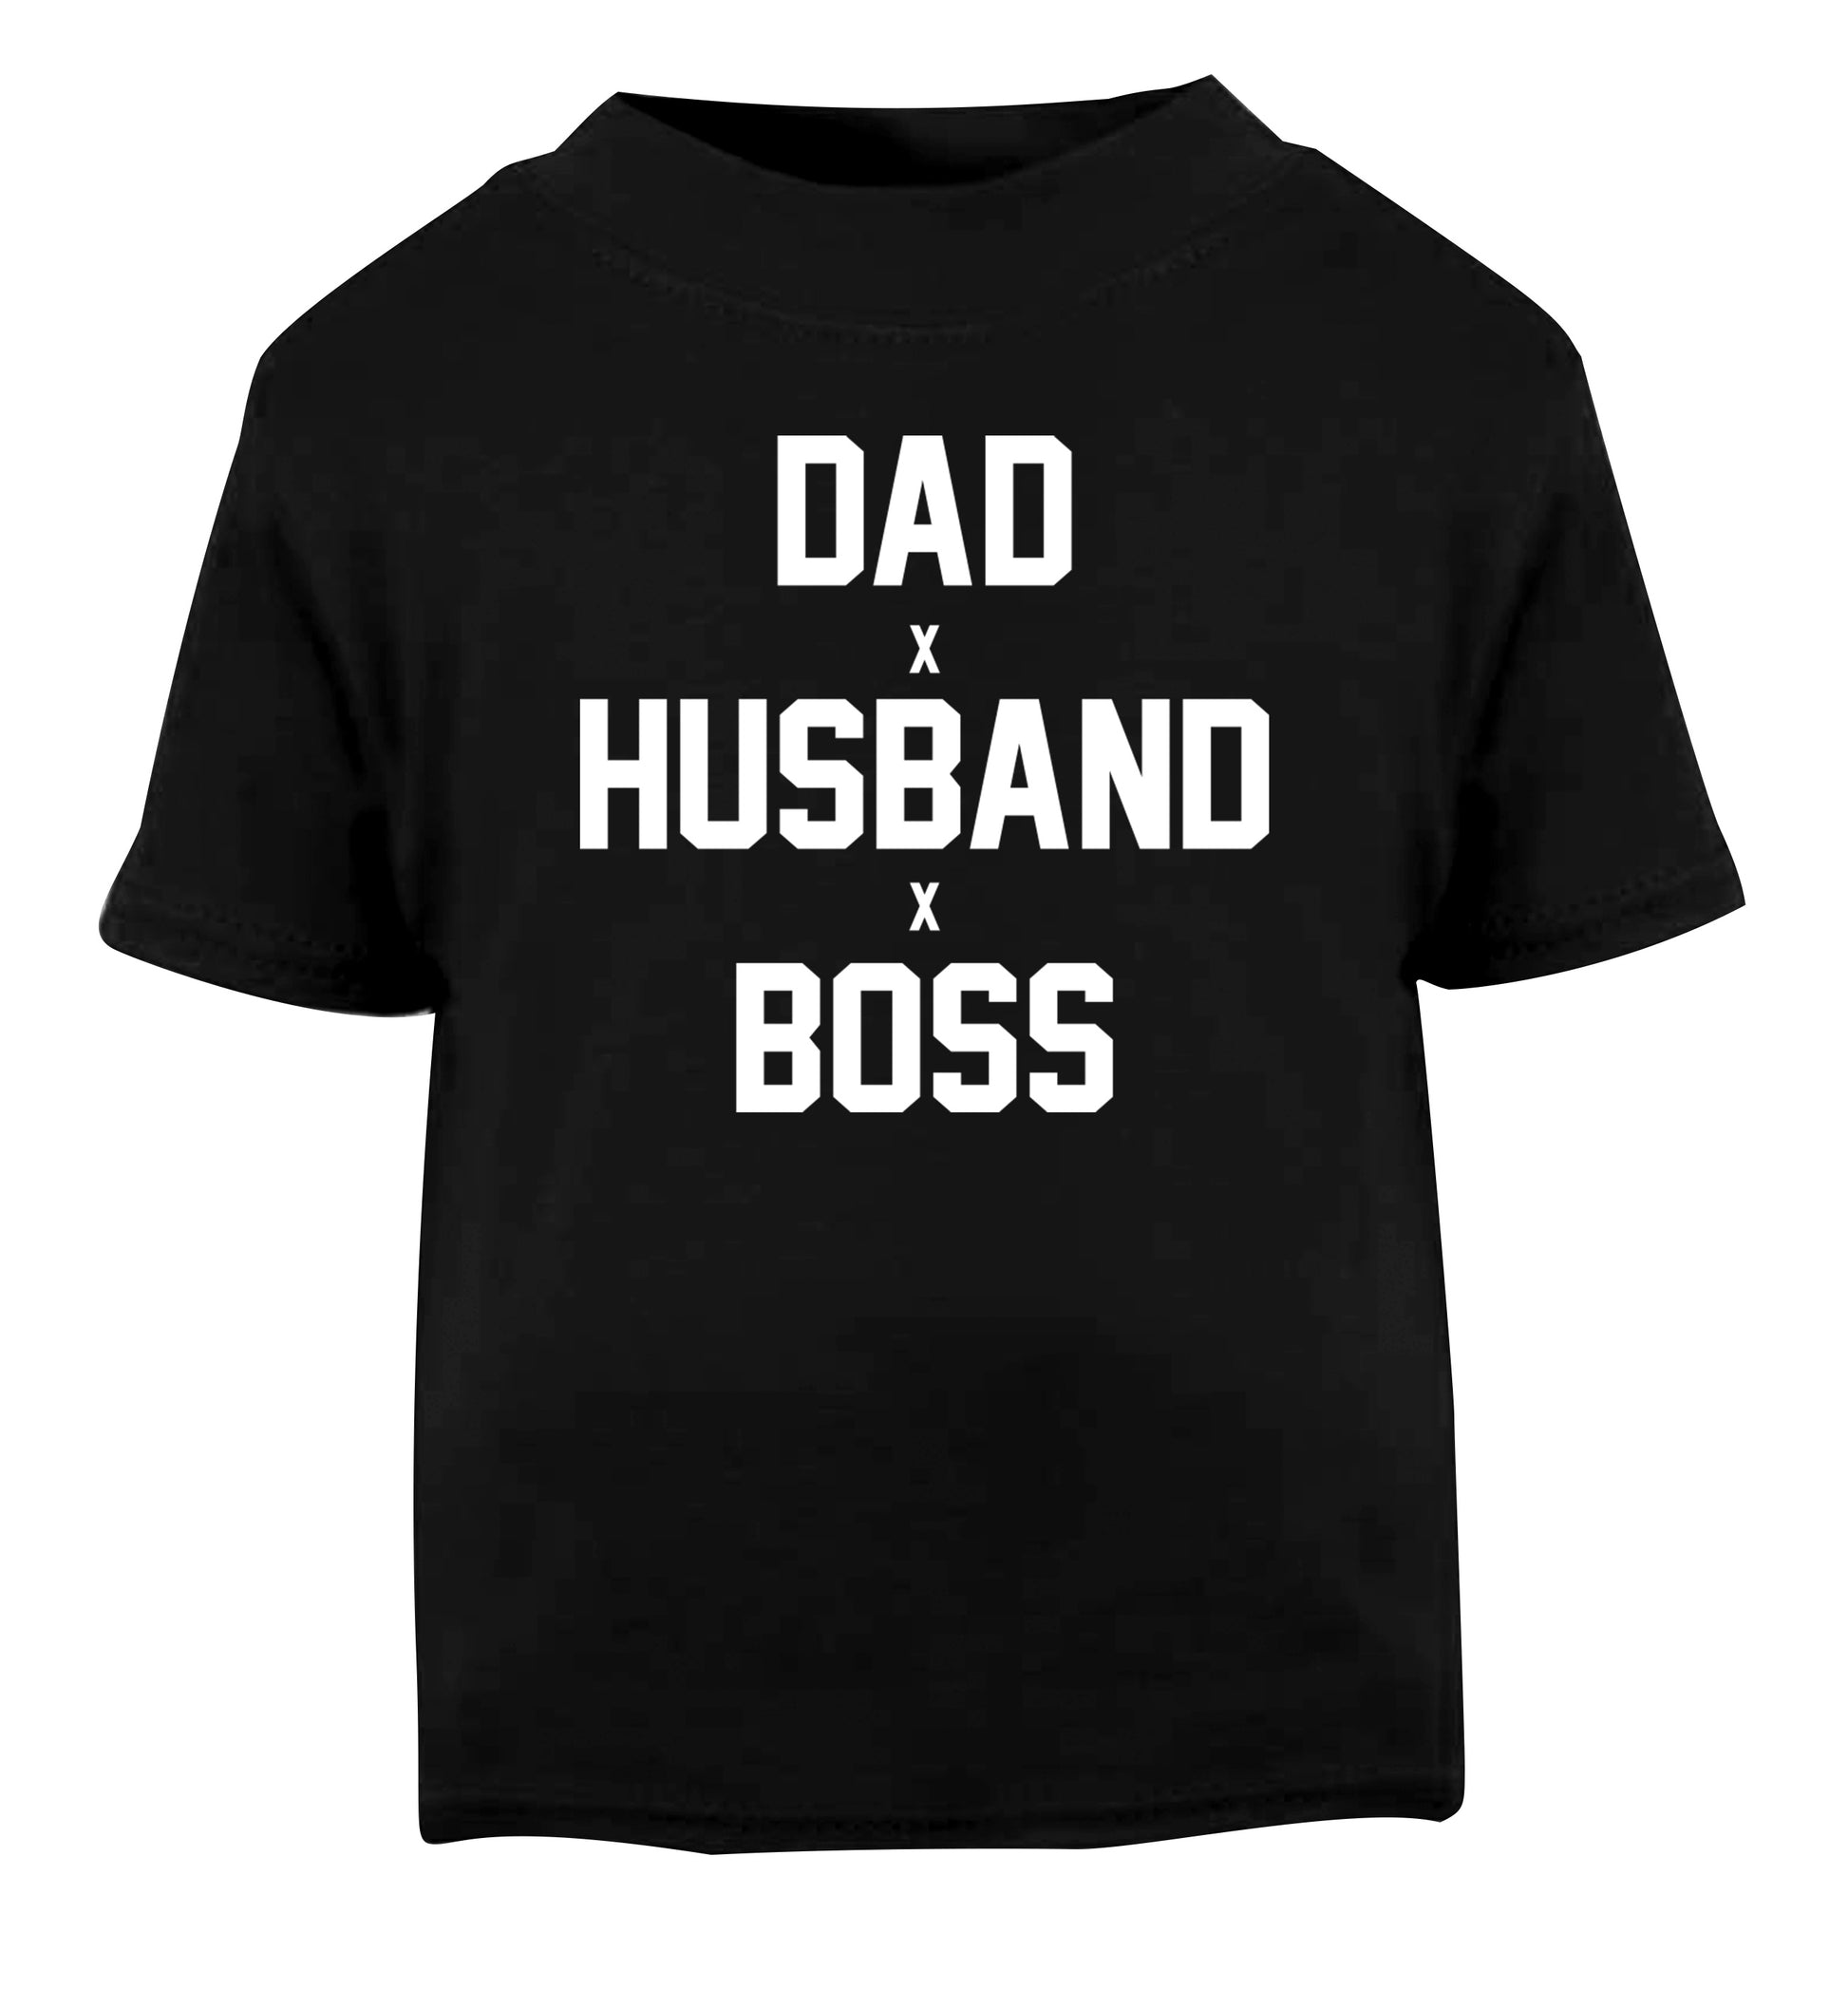 Dad husband boss Black Baby Toddler Tshirt 2 years